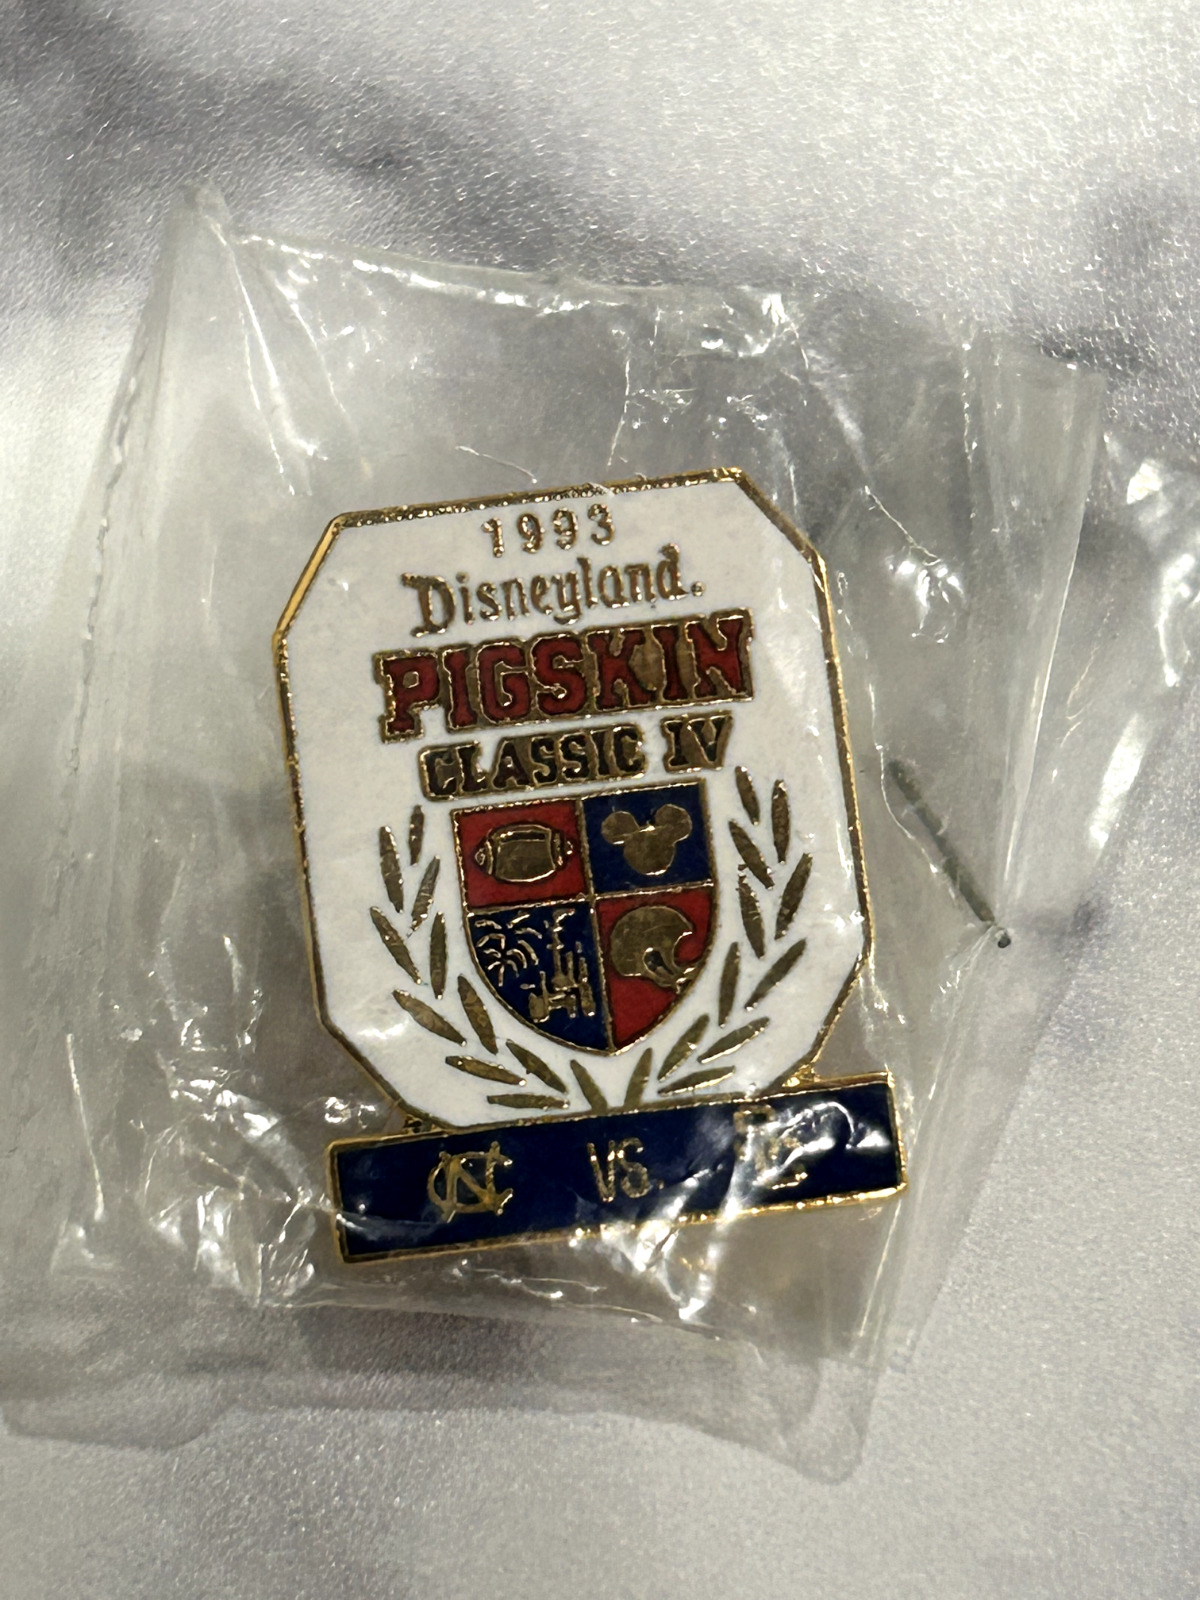 Disney Trading Pin - 1993 Disneyland Pigskin Classic IV - NC vs SC